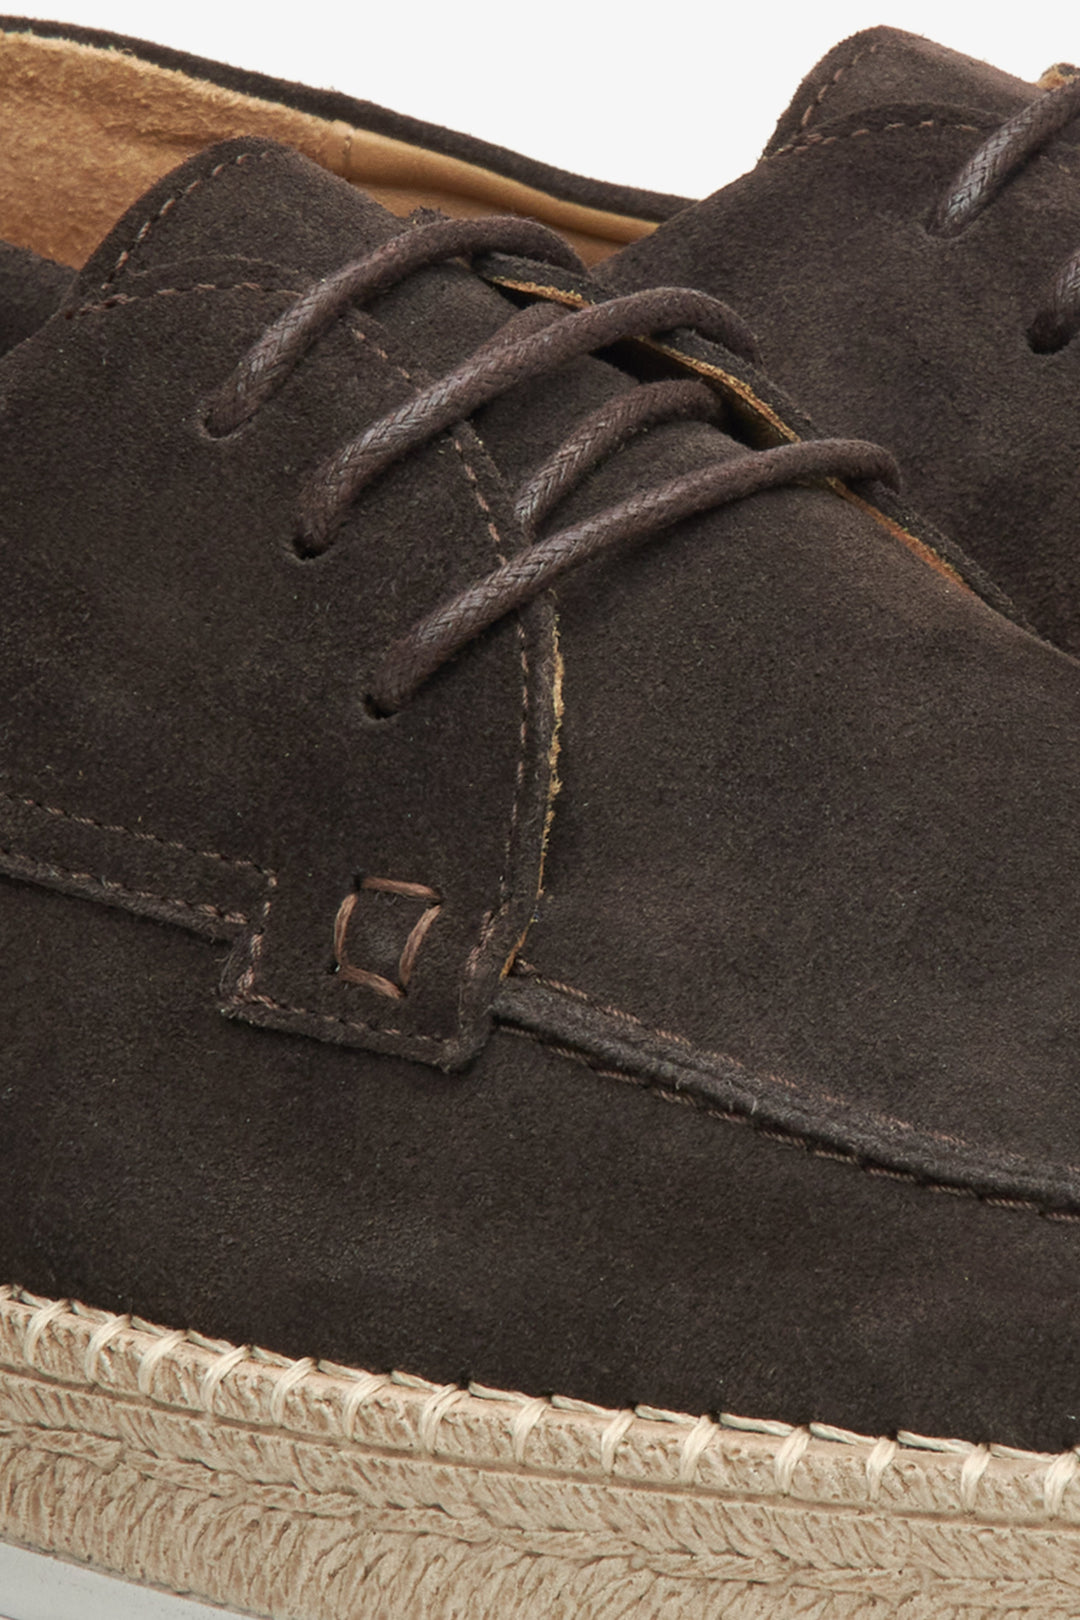 Estro dark brown men's velour moccasins - close-up on details.